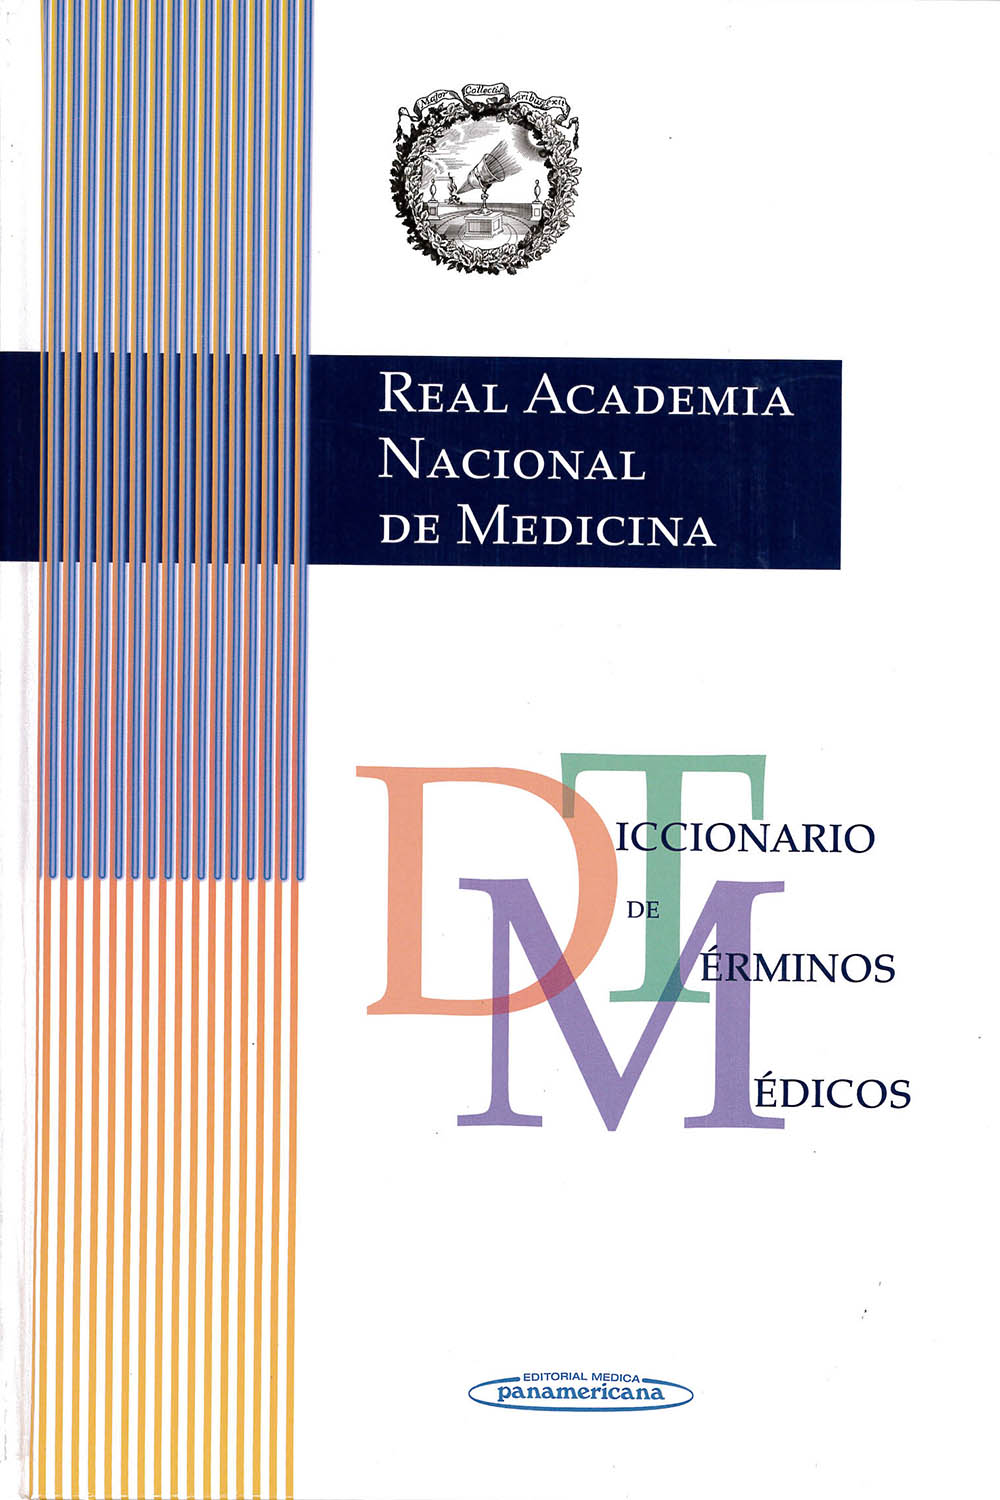 21 / 26 - R121 D53 Diccionario de Términos Médicos - Ed. Panamericana, España 2011